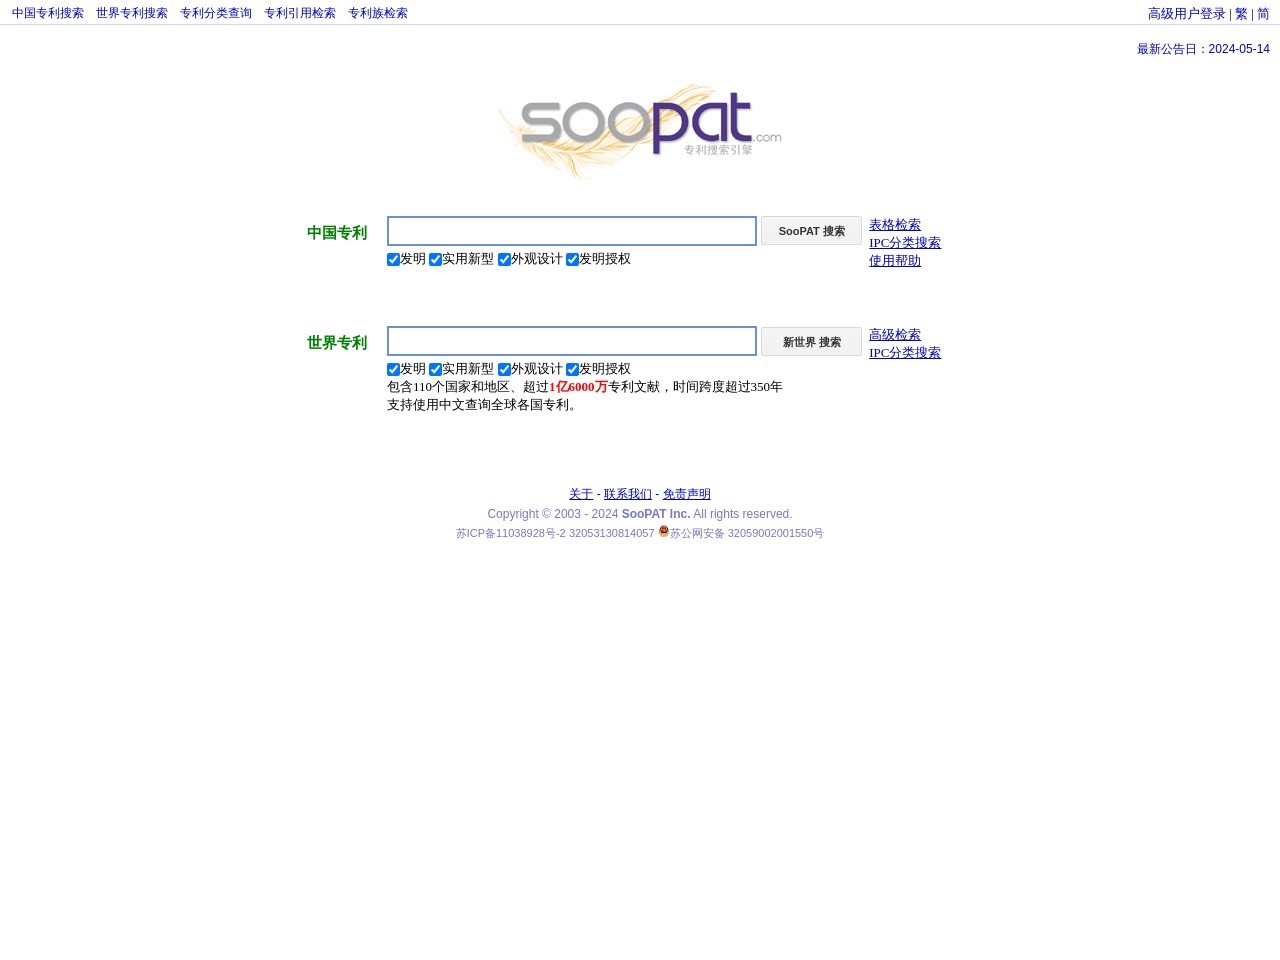 SooPAT 专业好用的中文专利搜索引擎